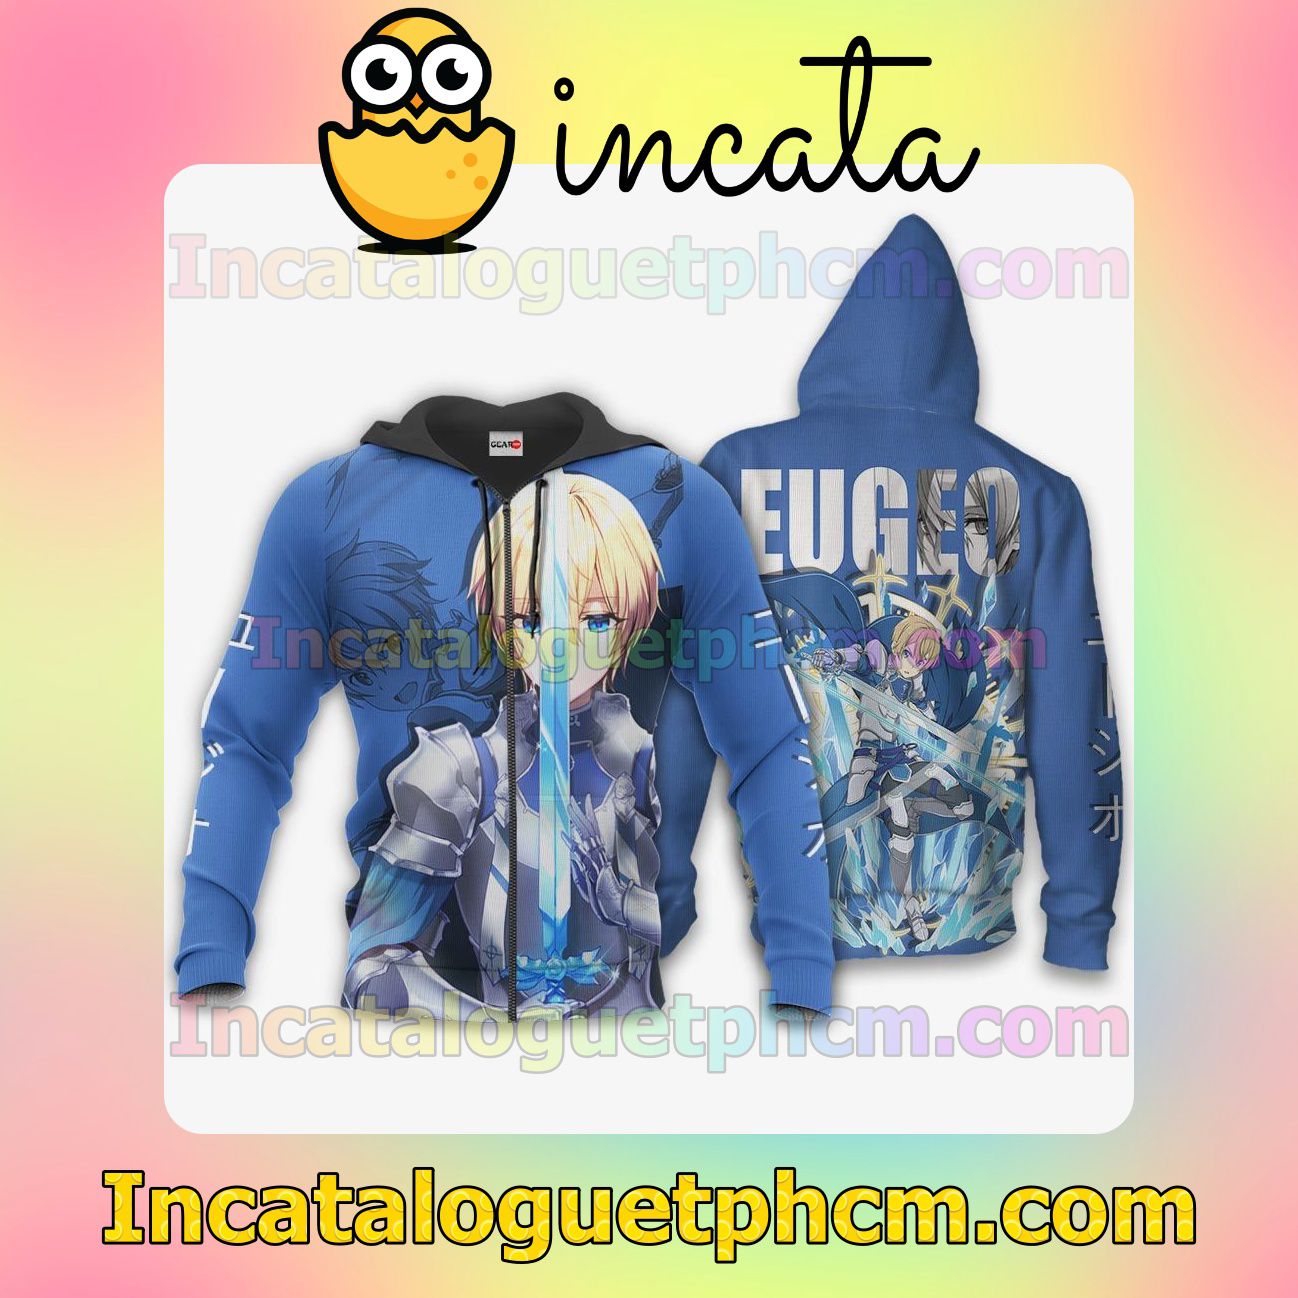 Sword Art Online Eugeo Anime Clothing Merch Zip Hoodie Jacket Shirts